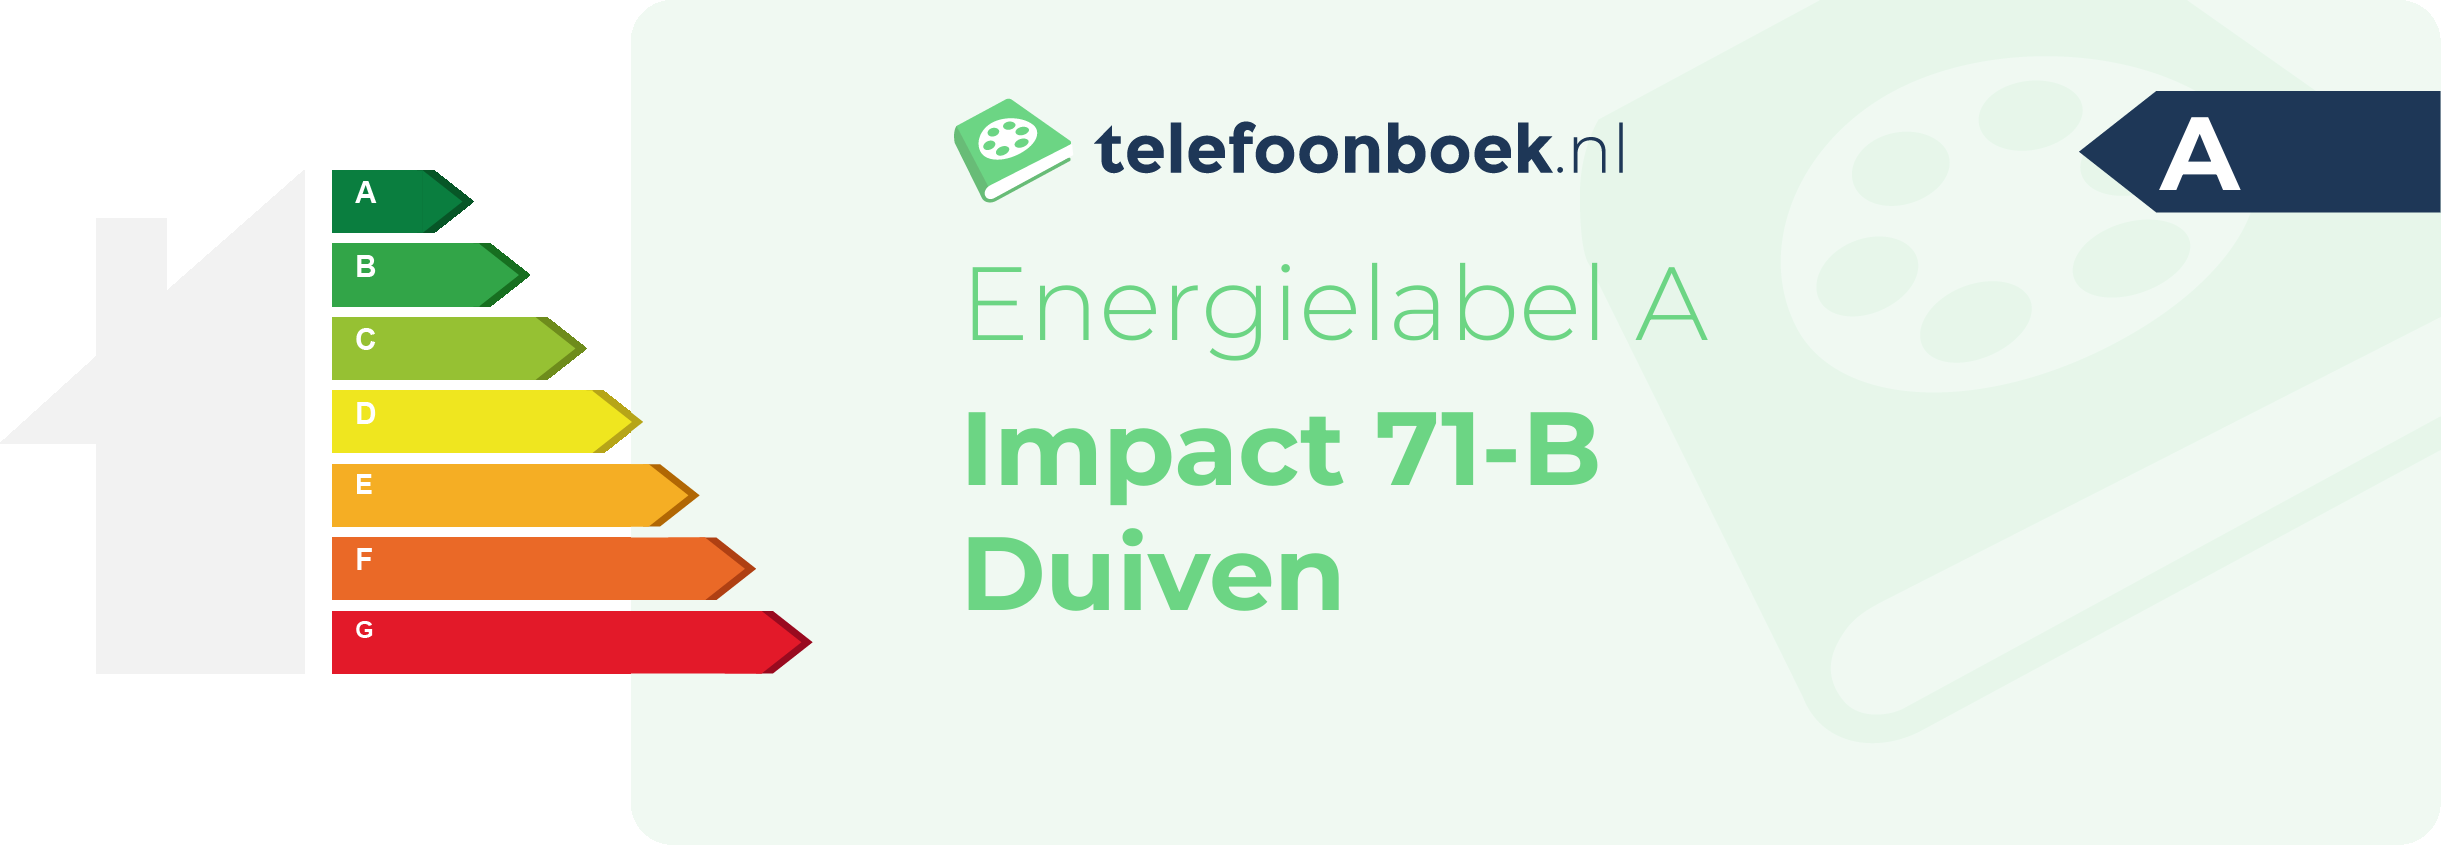 Energielabel Impact 71-B Duiven